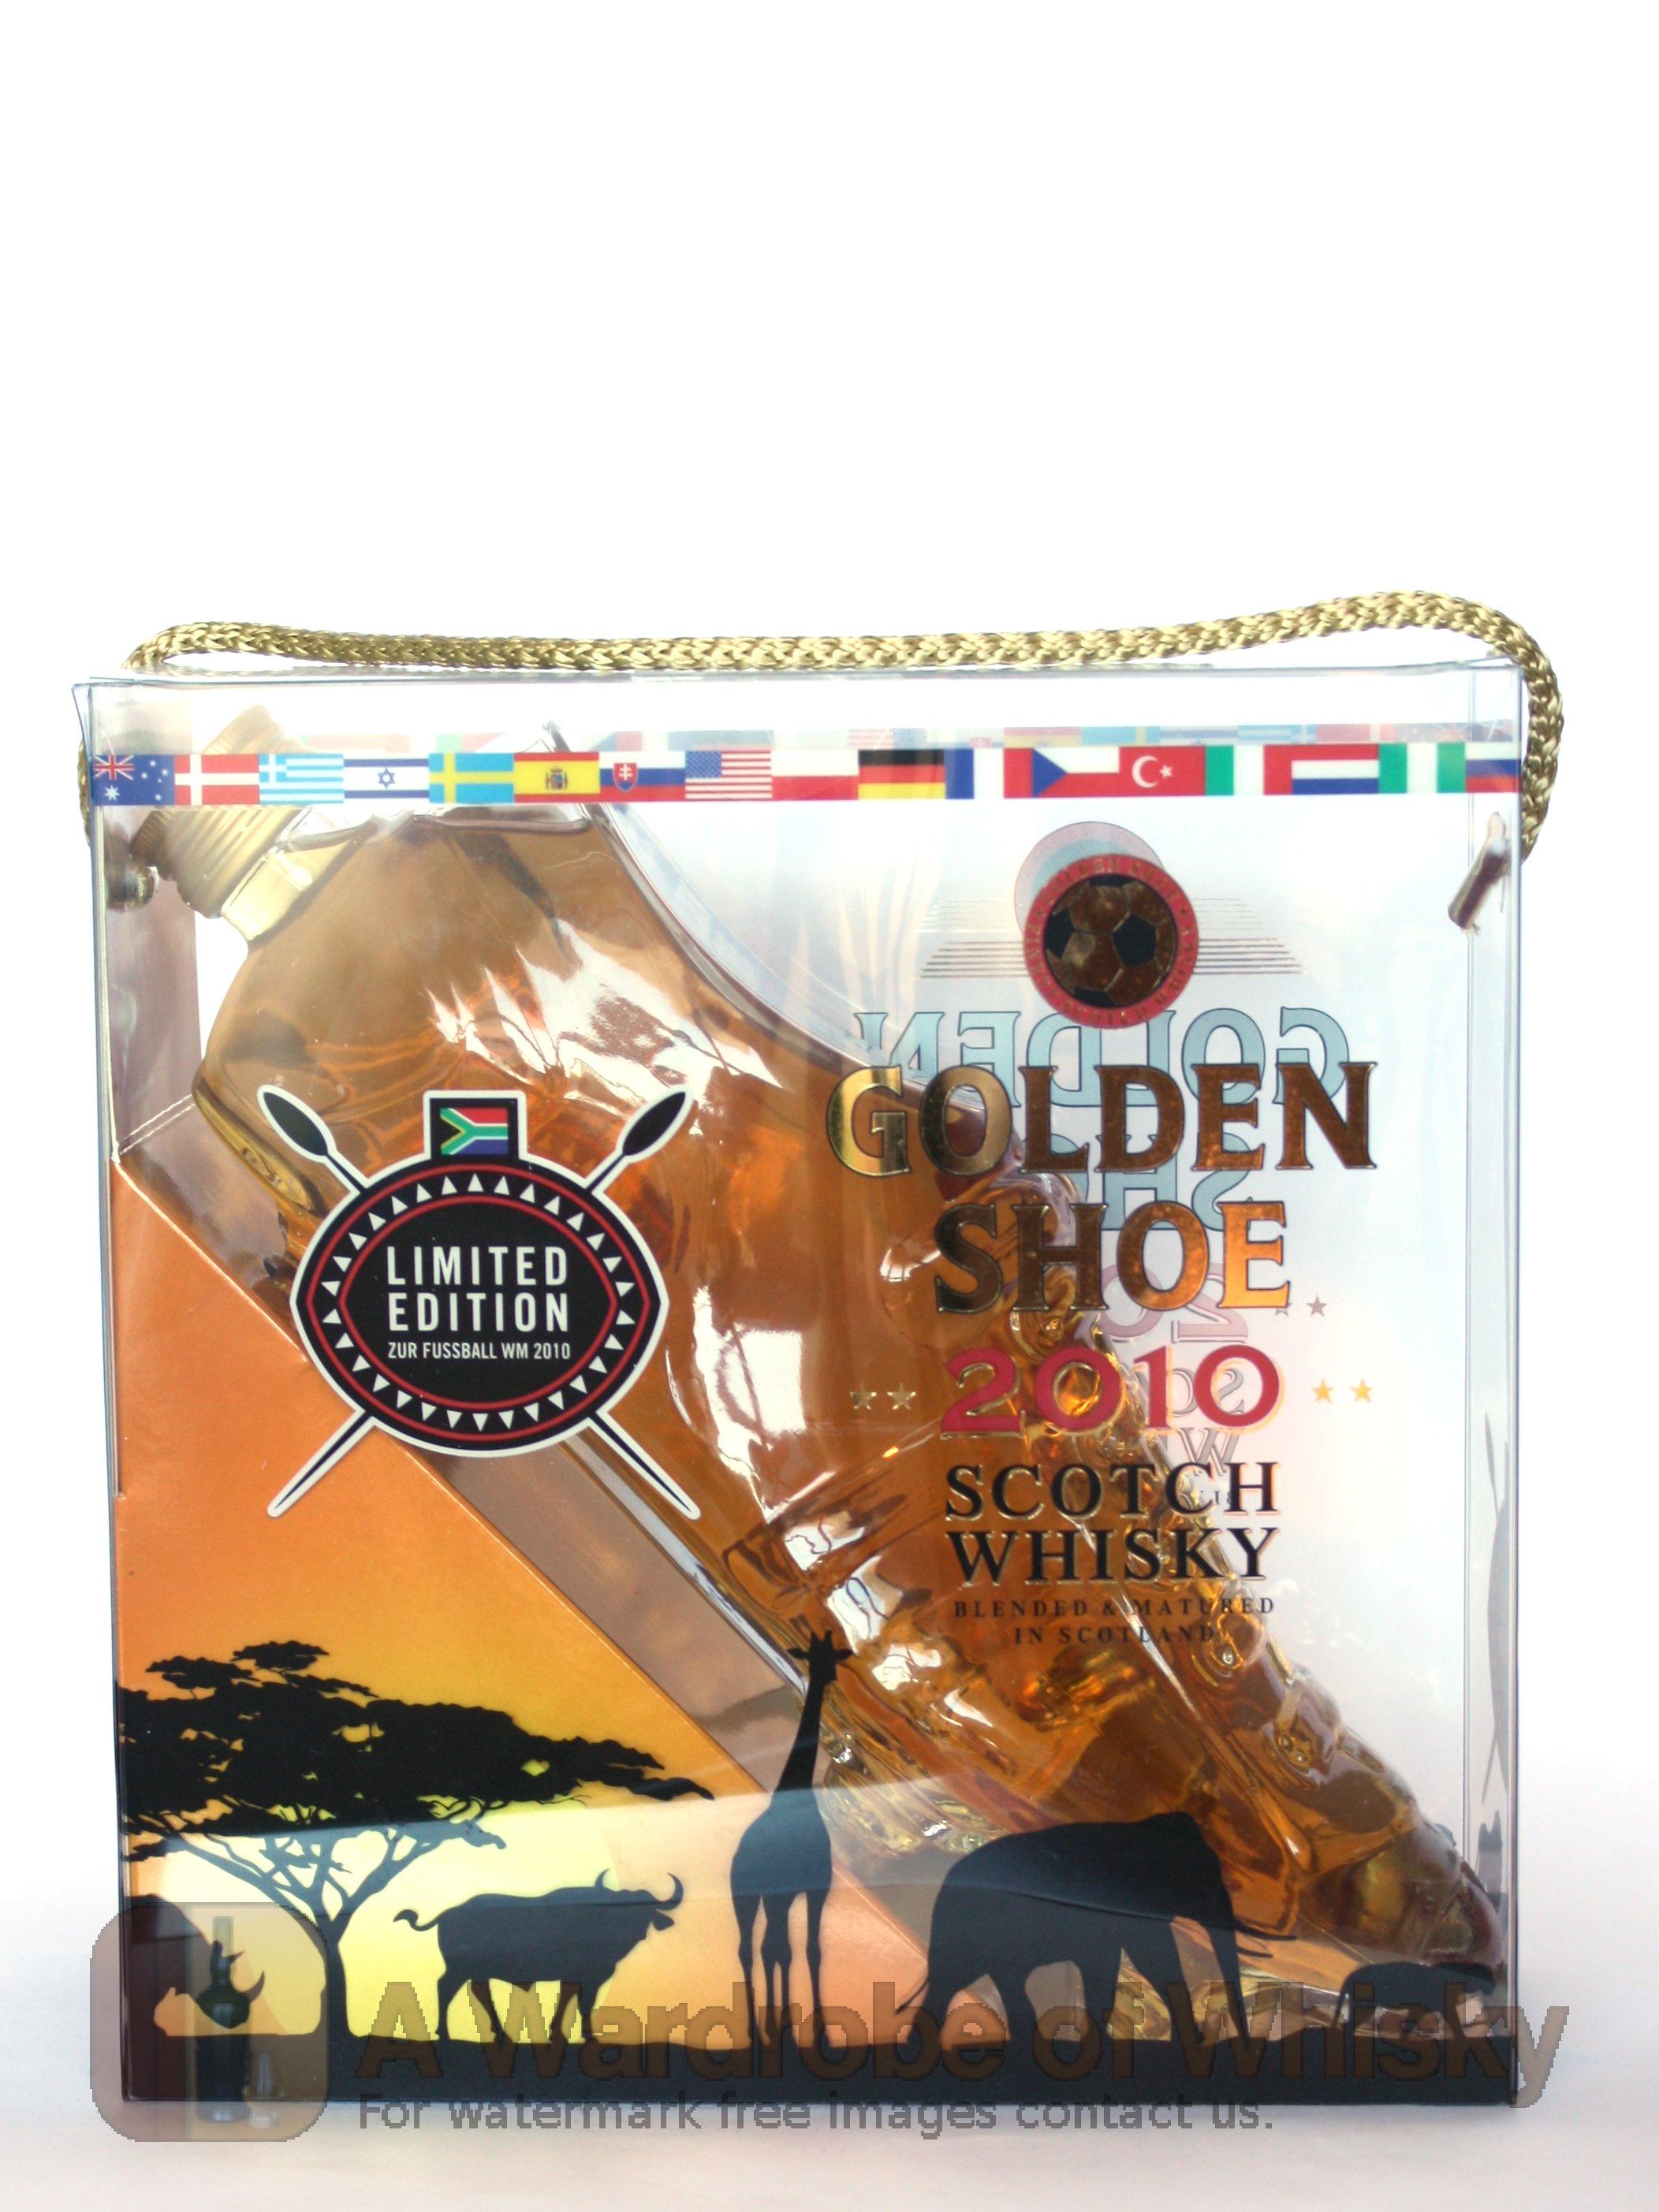 Buy Golden Shoe 2010 Blended Scotch Blended Whisky - Unspecified Malts